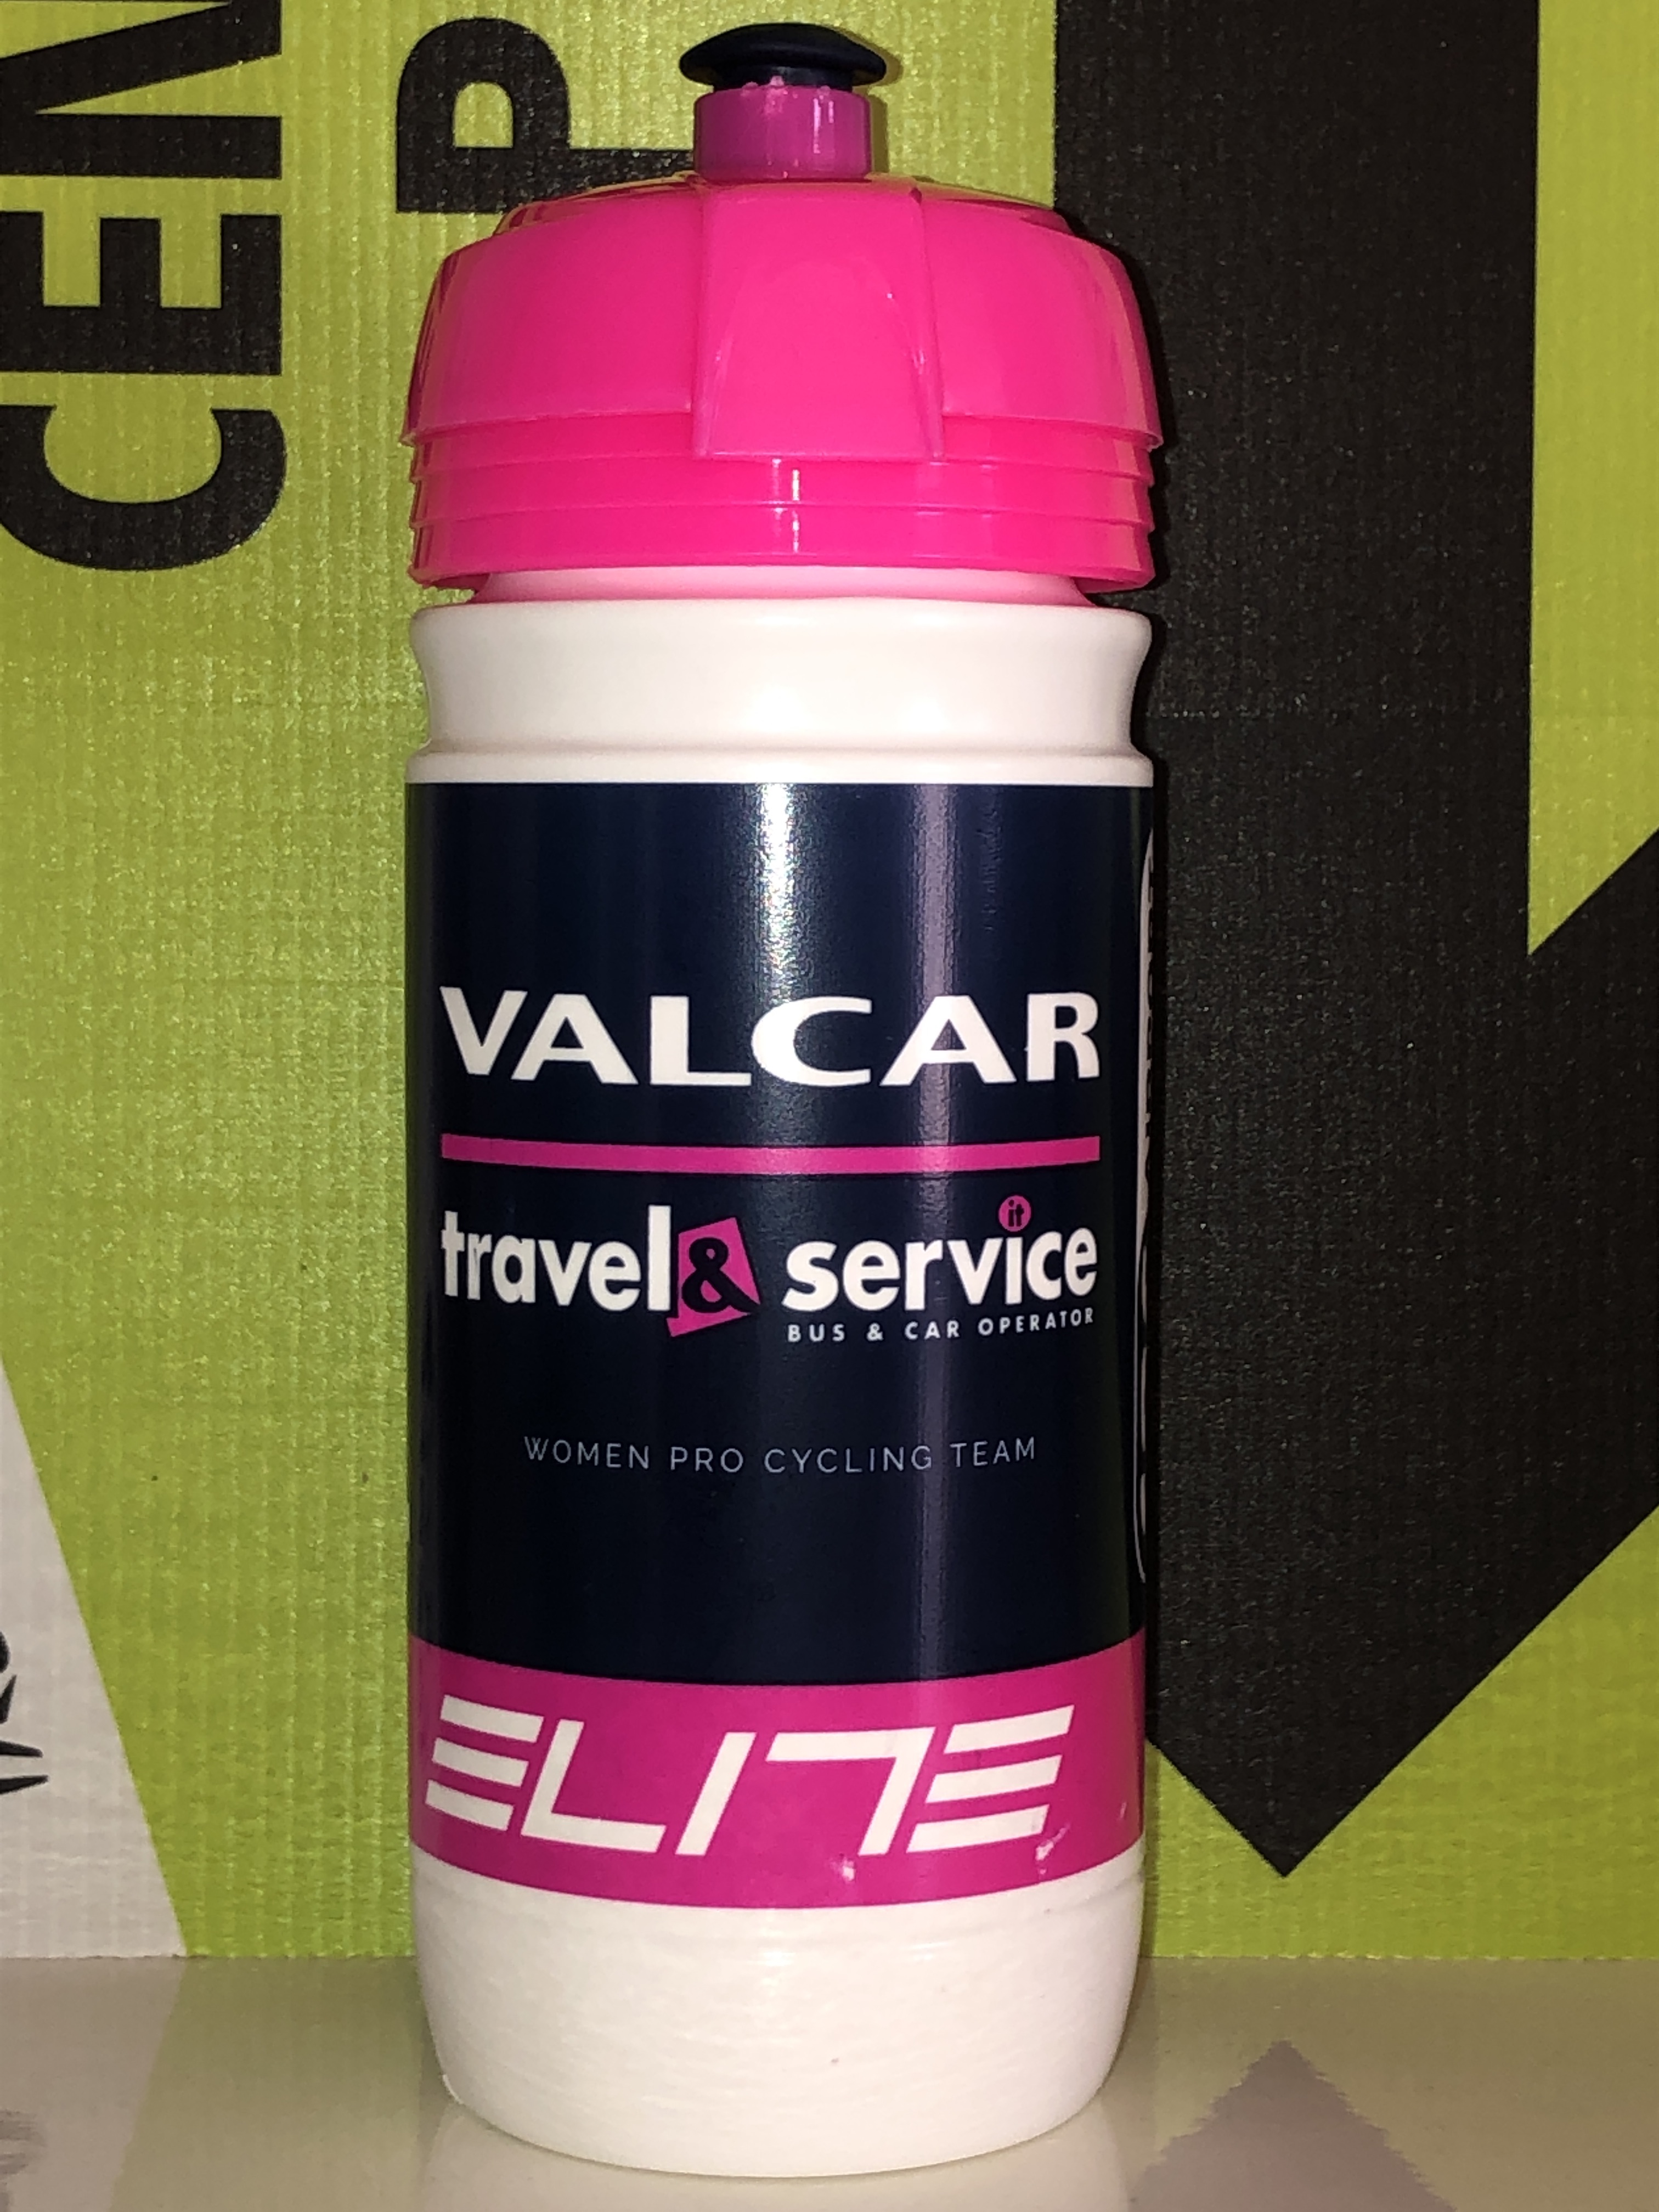 Elite Corsa - Valcar Travel & Service 2 - 2022